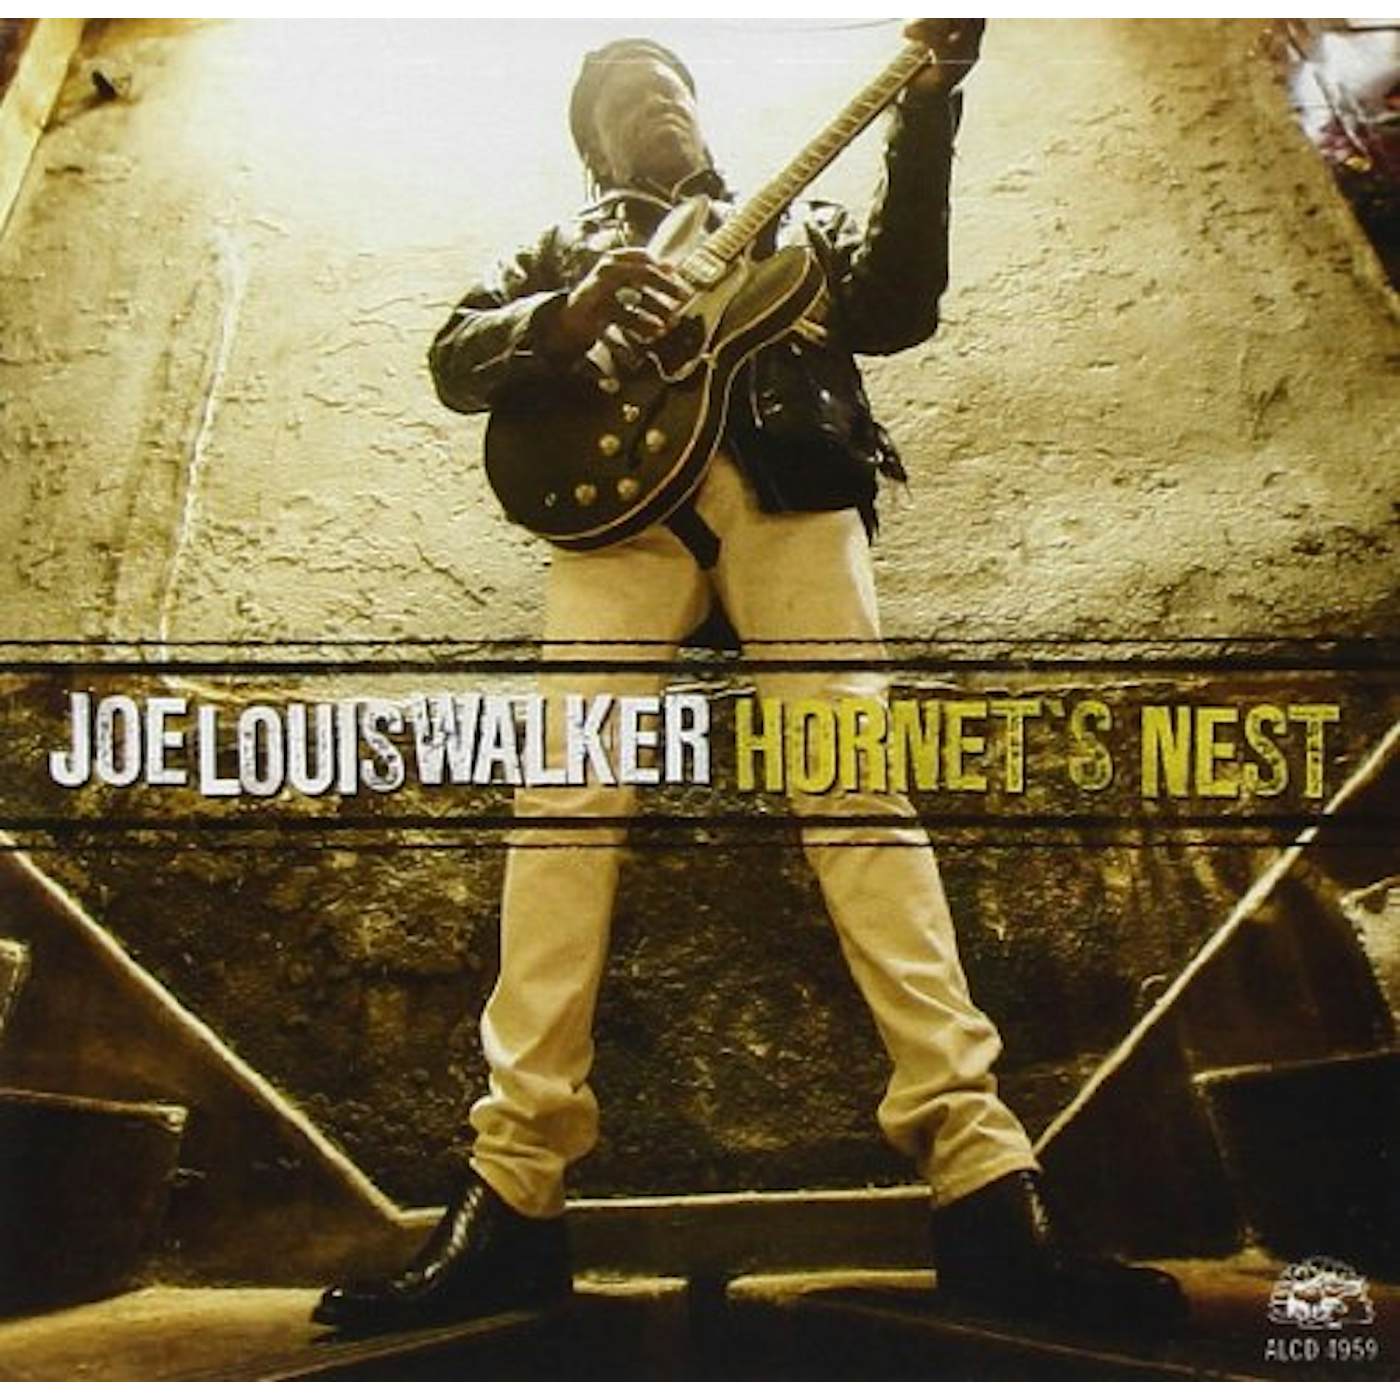 Joe Louis Walker HORNET'S NEST CD